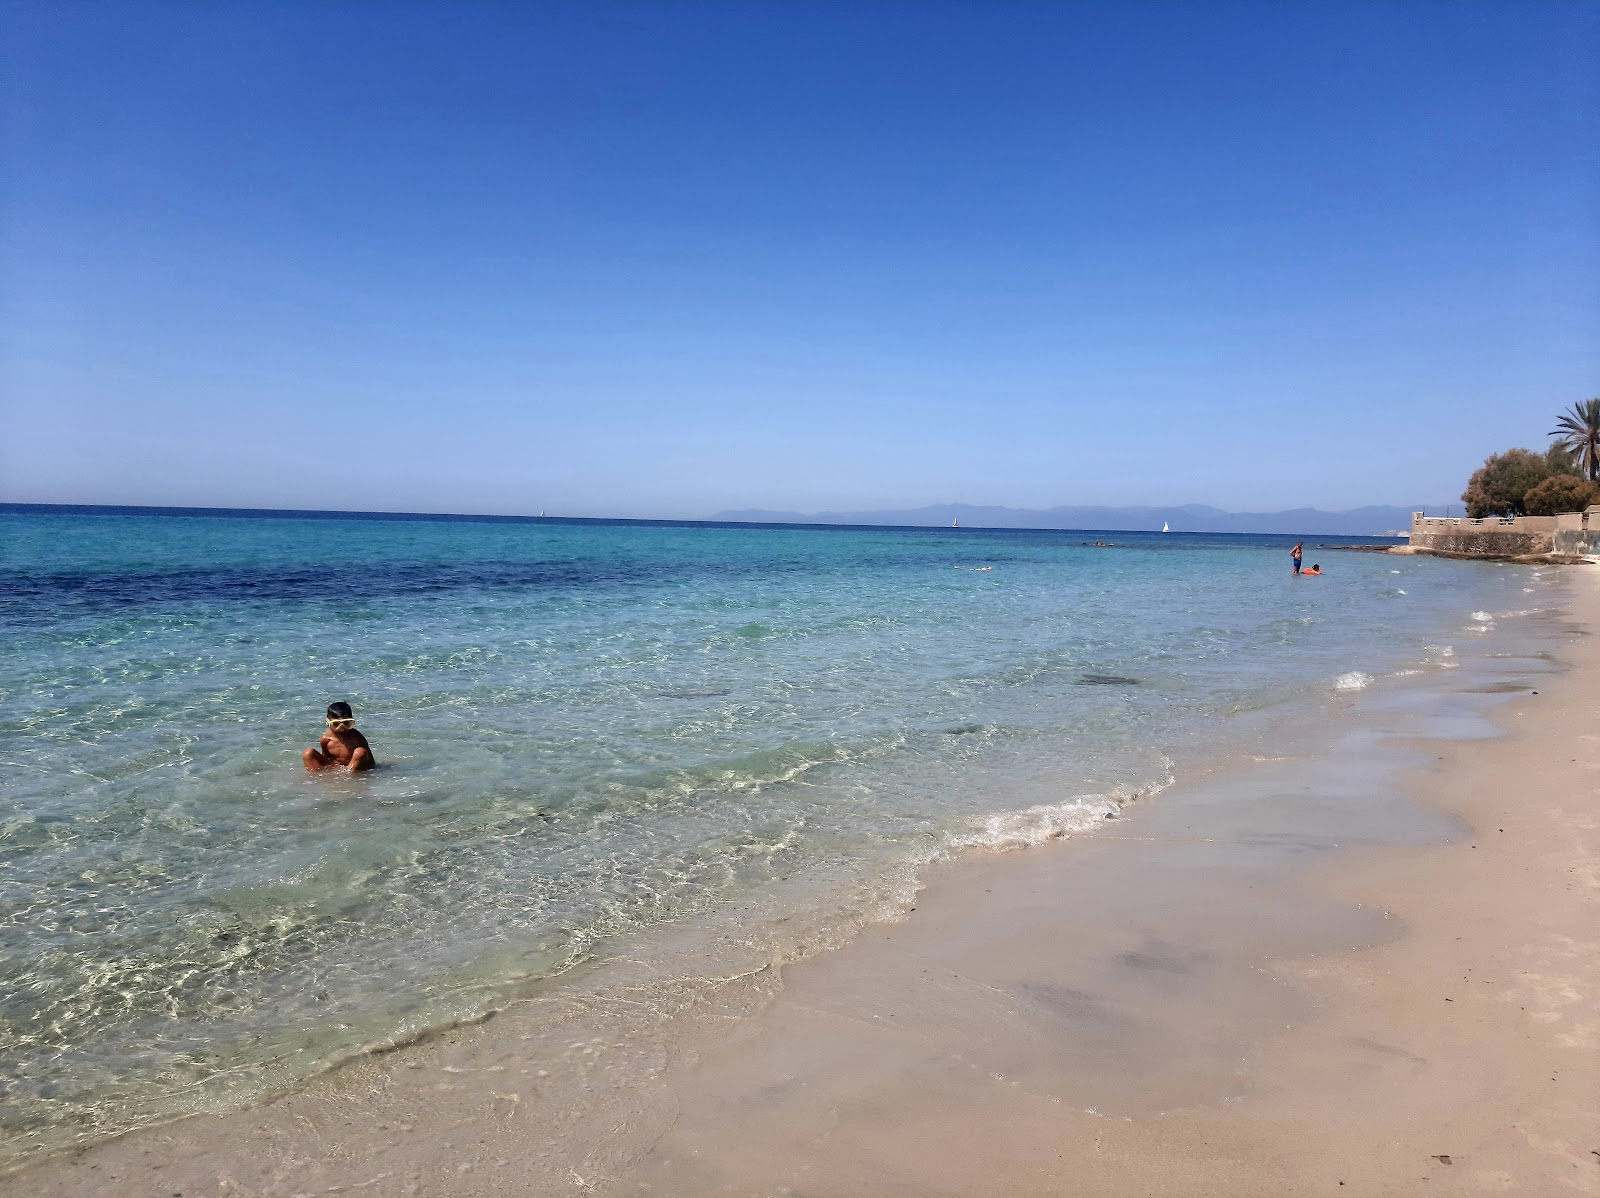 Foto de Spiaggia di Capitana - lugar popular entre los conocedores del relax